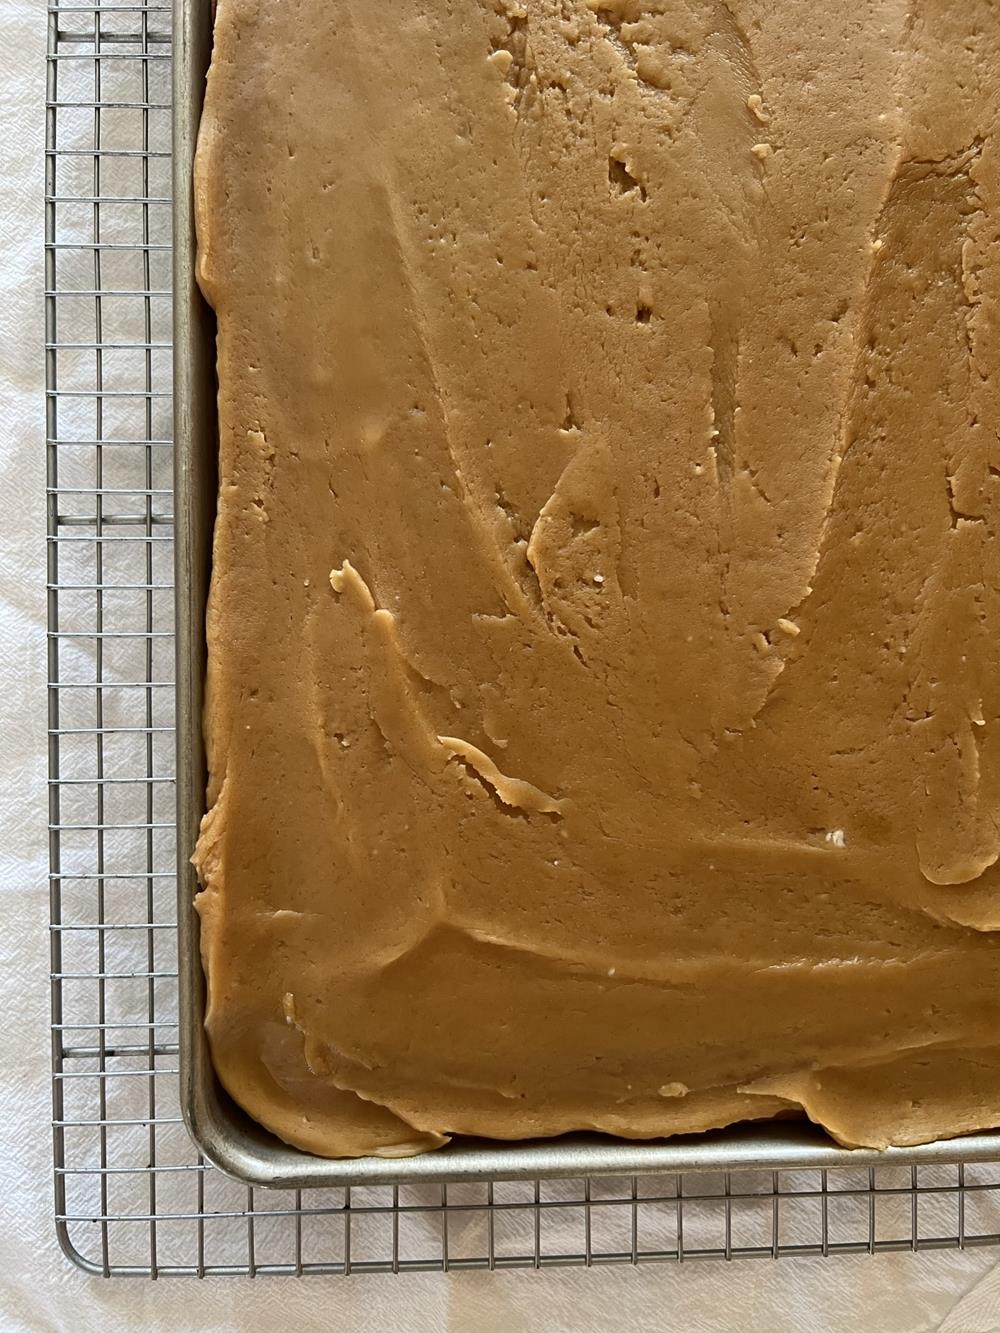 Peanut Butter Sheet Cake Recipe in pan